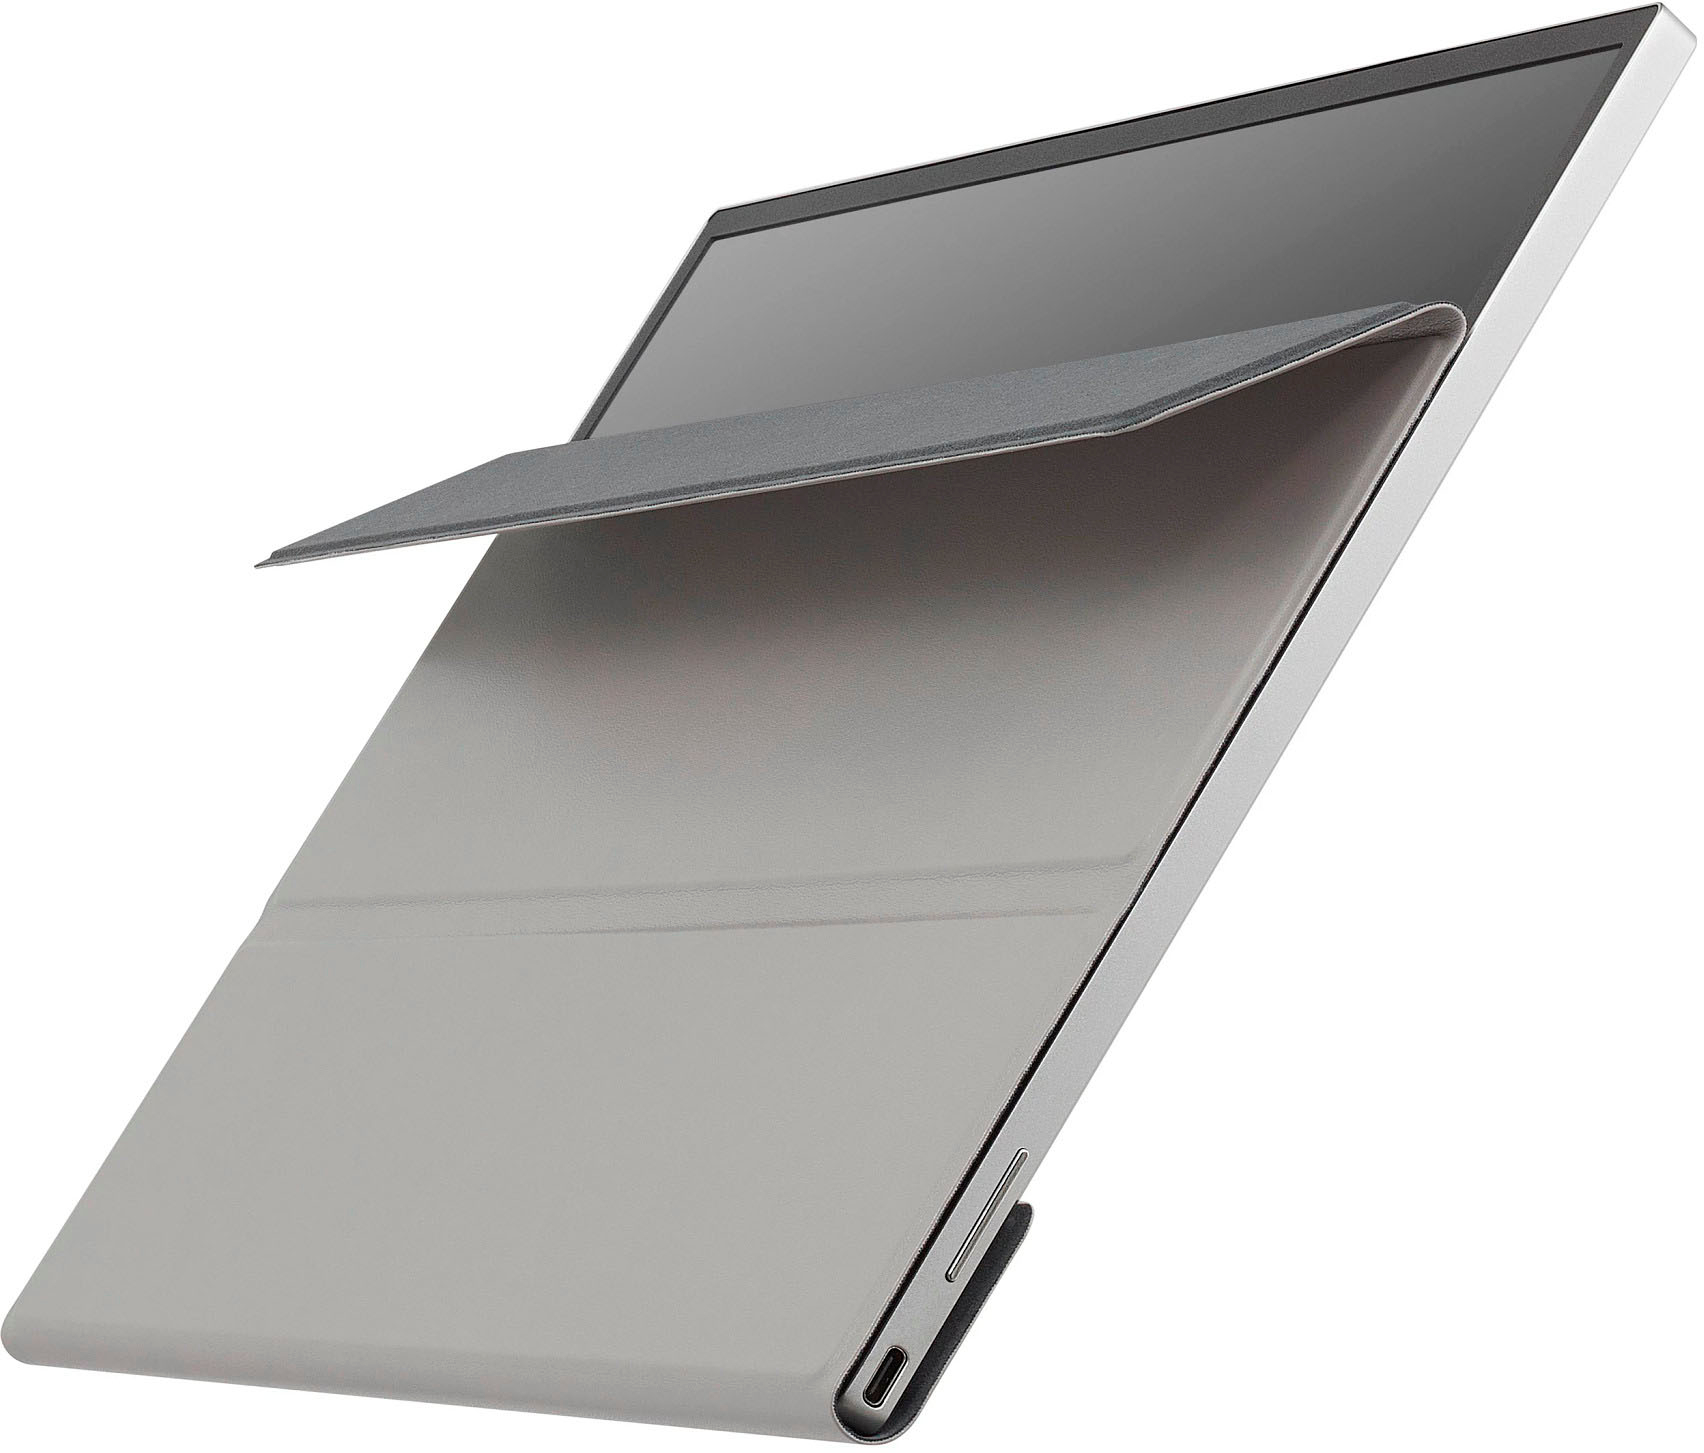 LG gram +view 16” IPS LED 60Hz Portable Monitor (USB Type-C) Silver  16MR70.ASDU1 - Best Buy